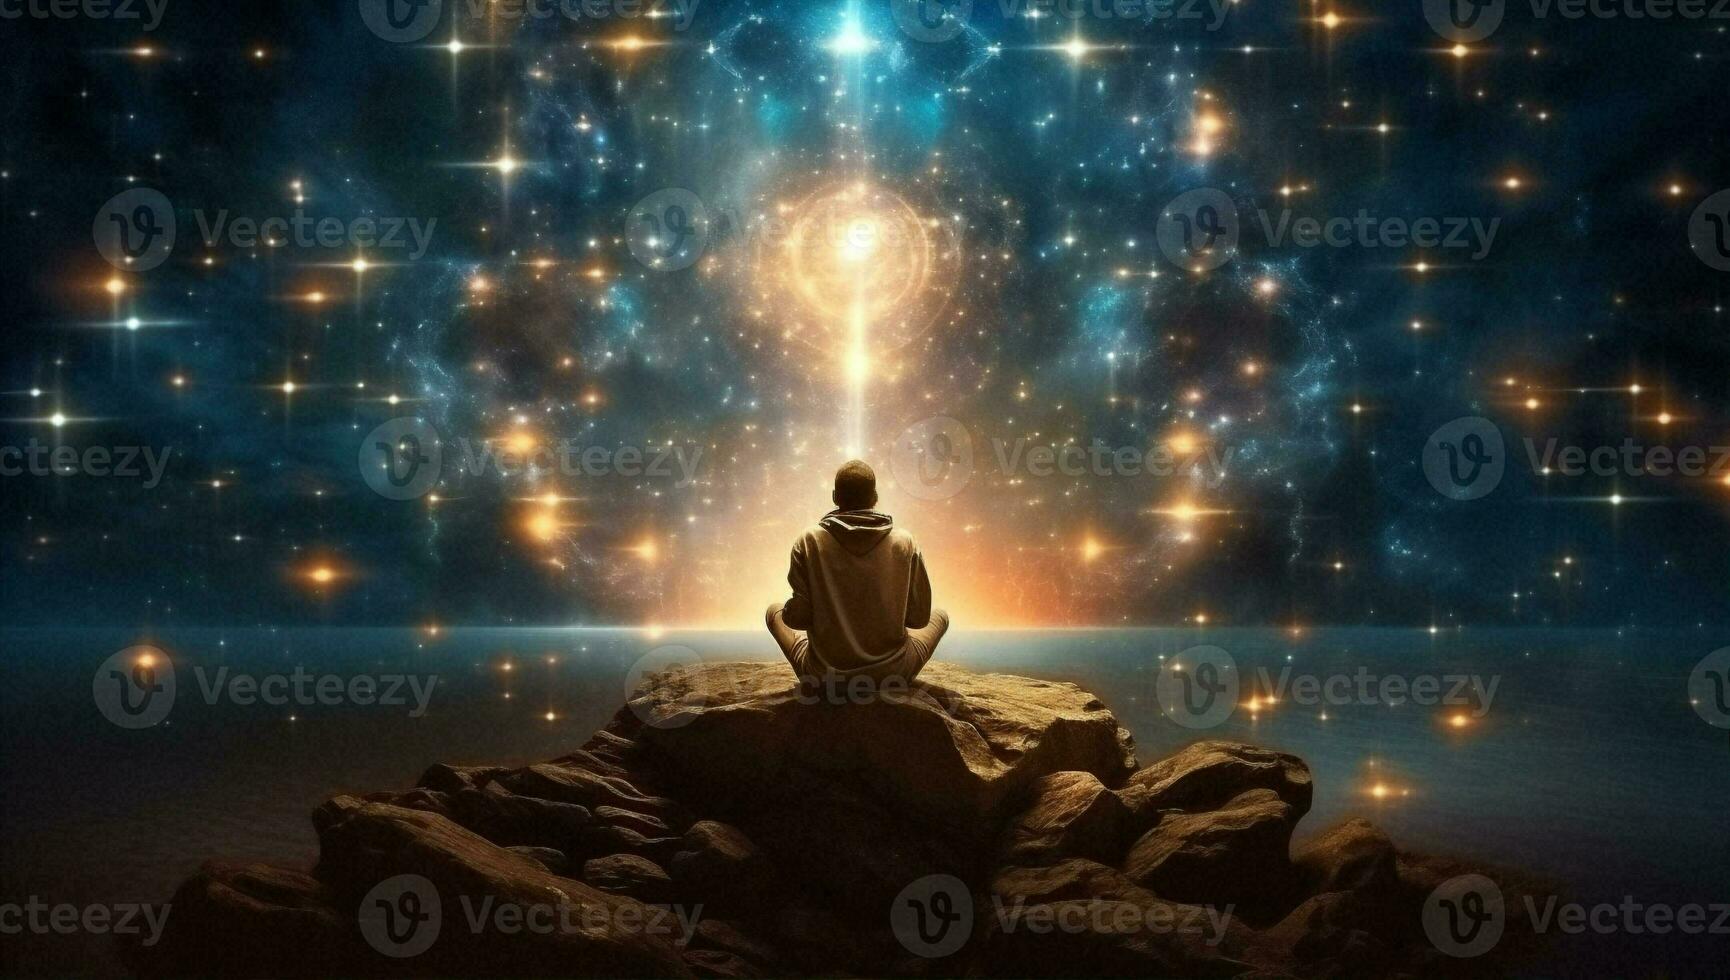 humano meditando budismo zen universo loto espiritualidad ligero espacio silueta estrella energía yoga foto